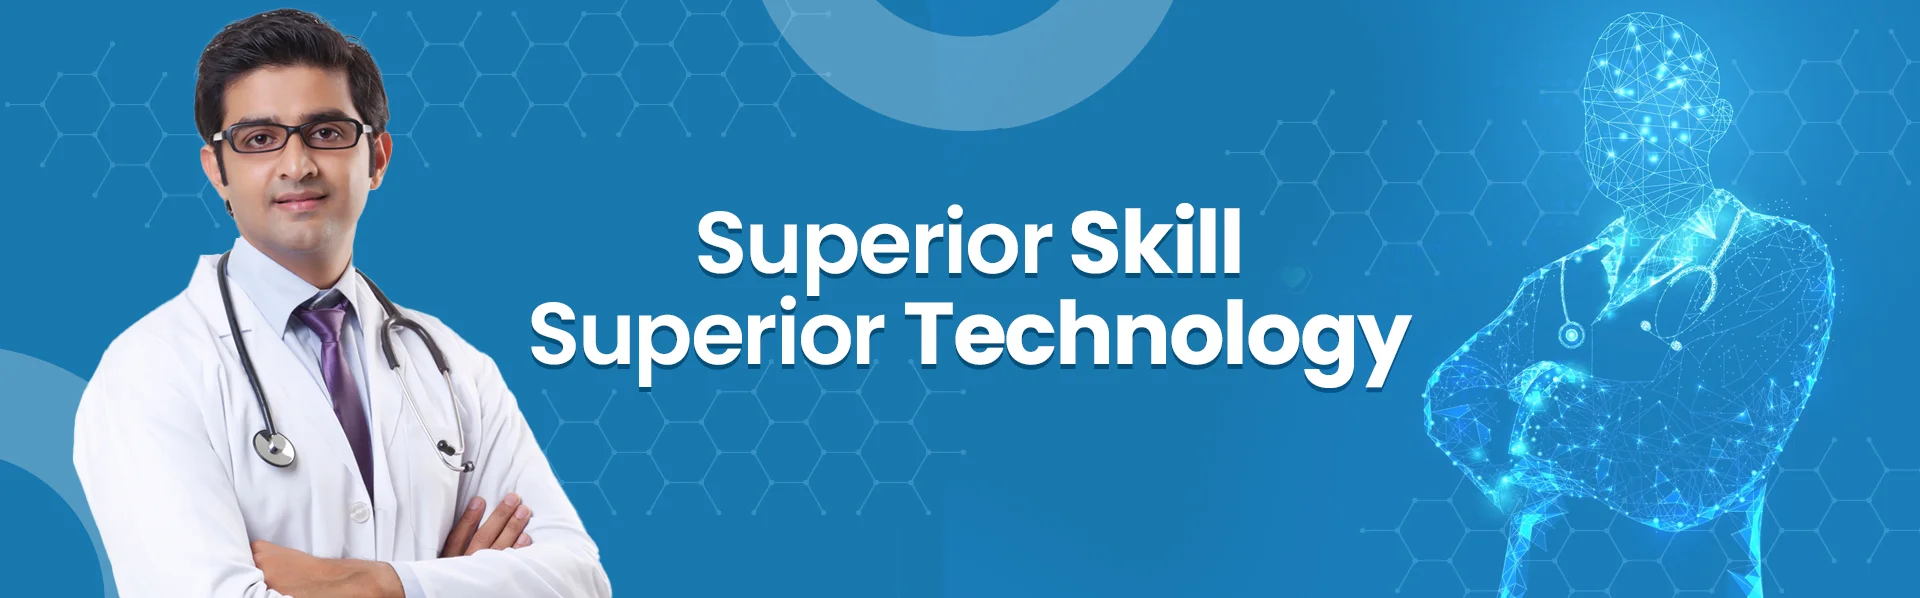 Superior Skill Superior Technology